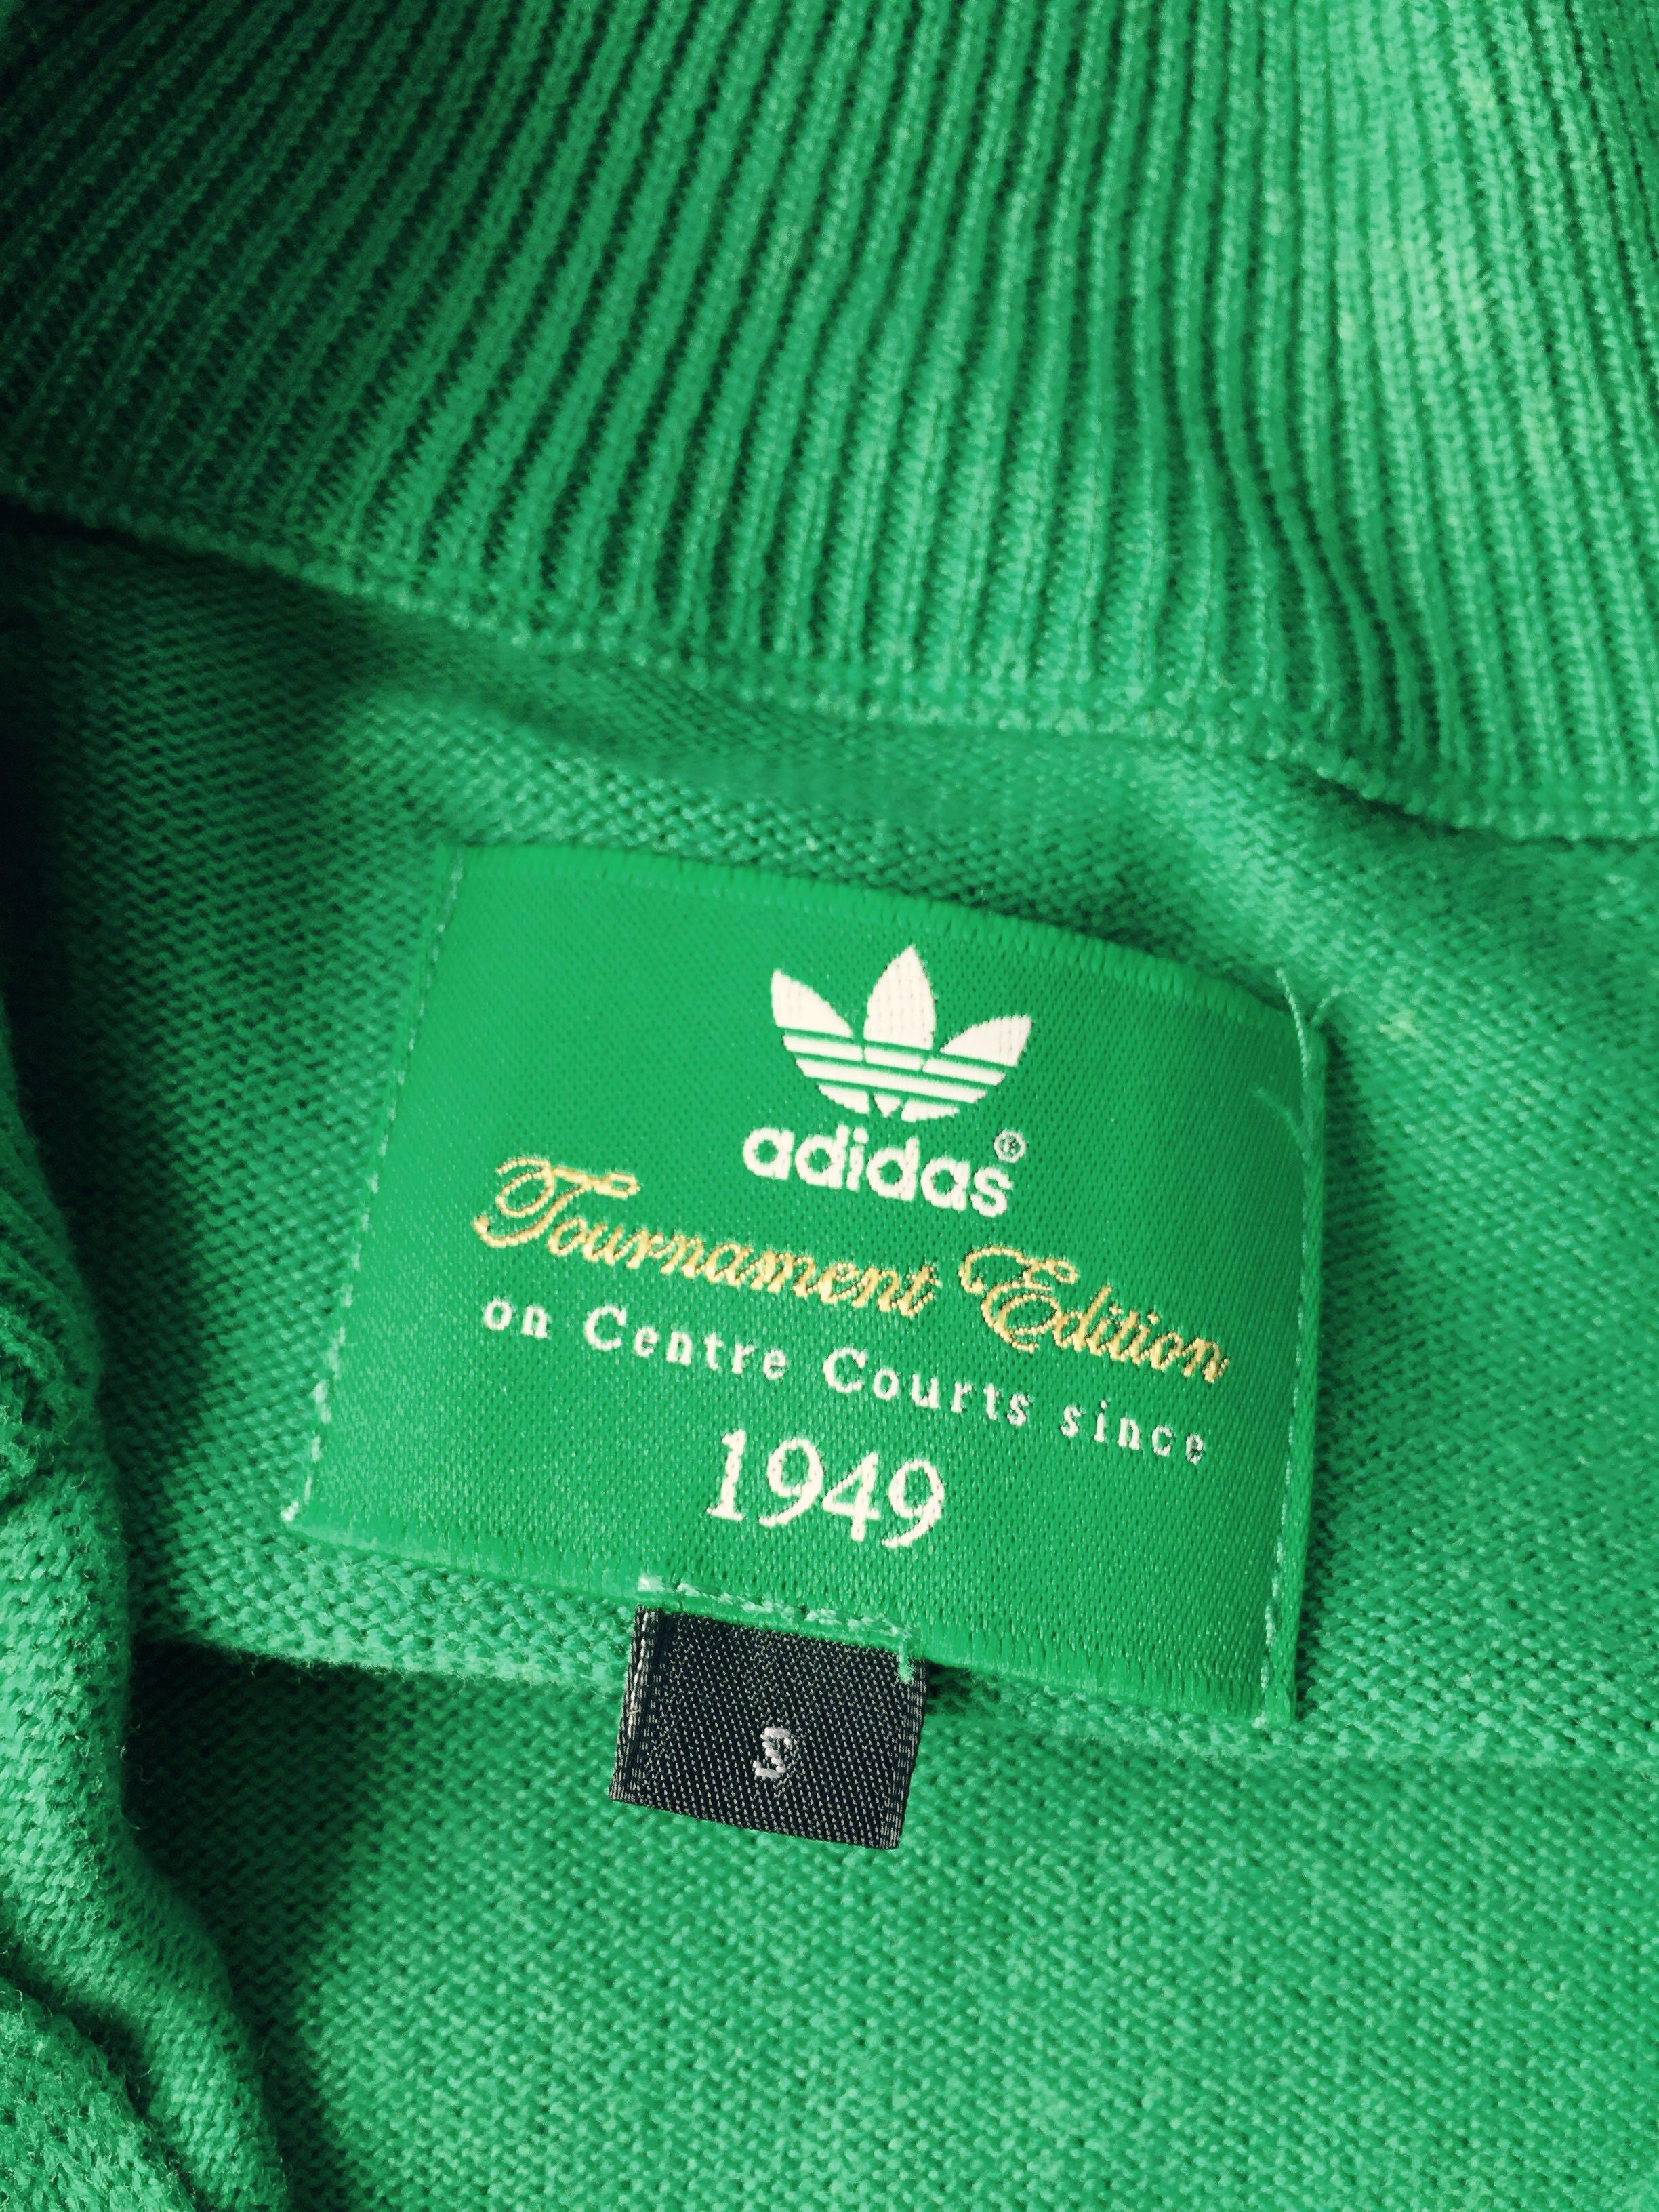 adidas originals 1949 jacket